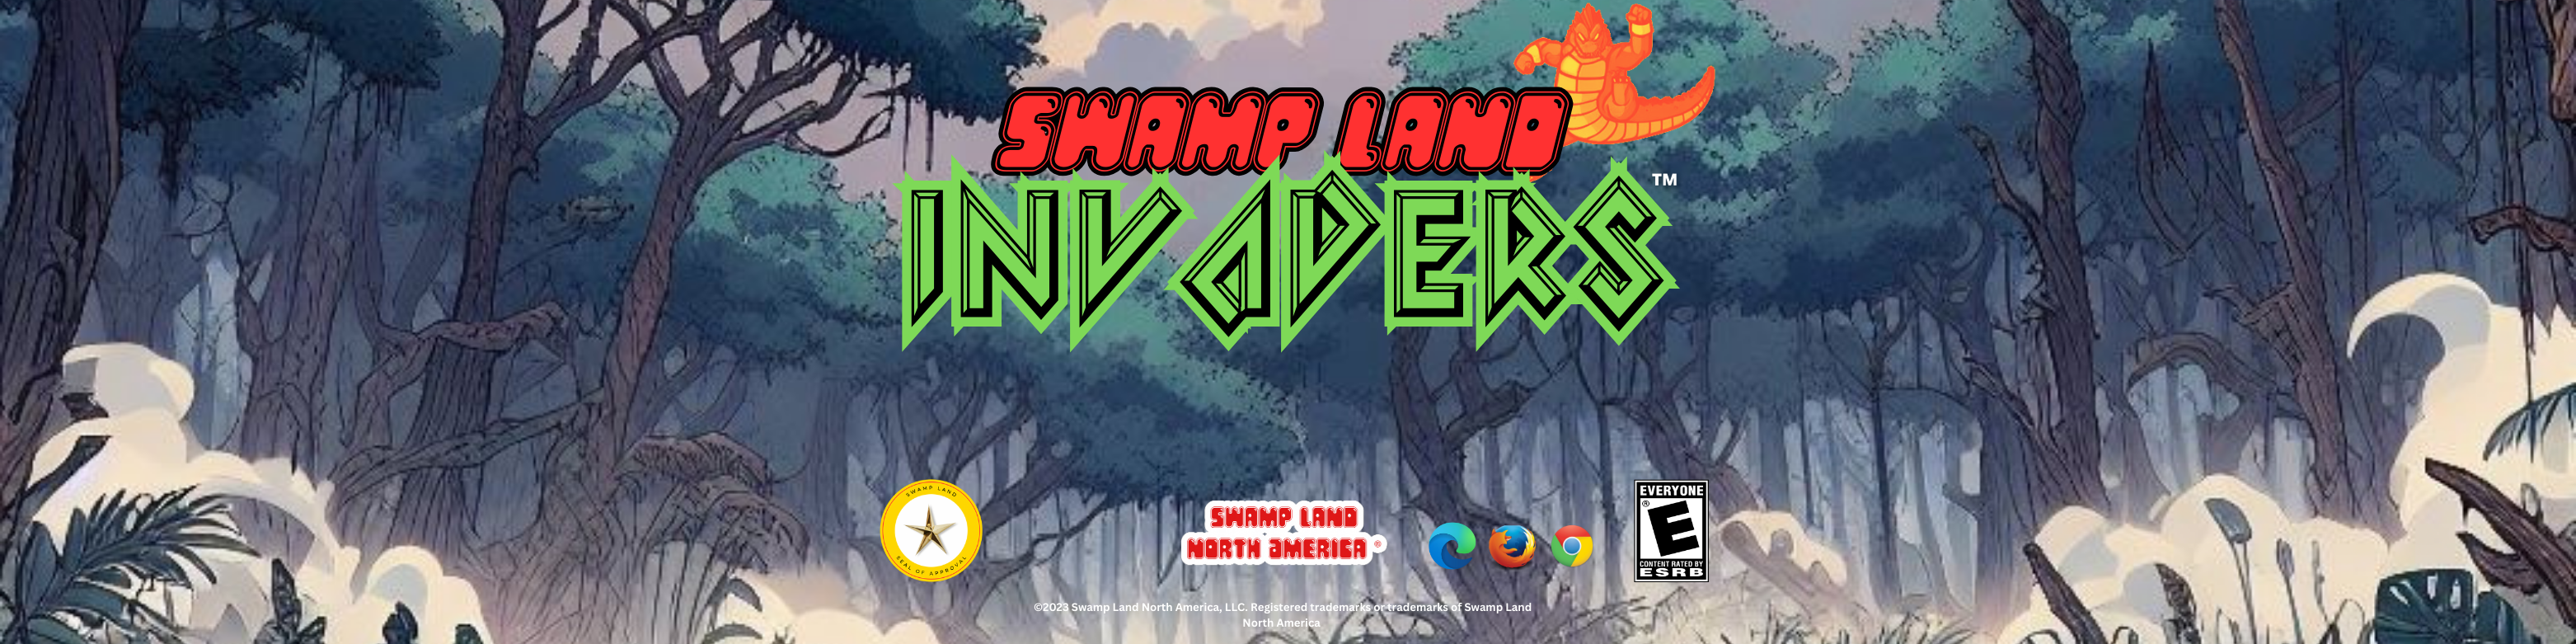 Swamp Land Invaders